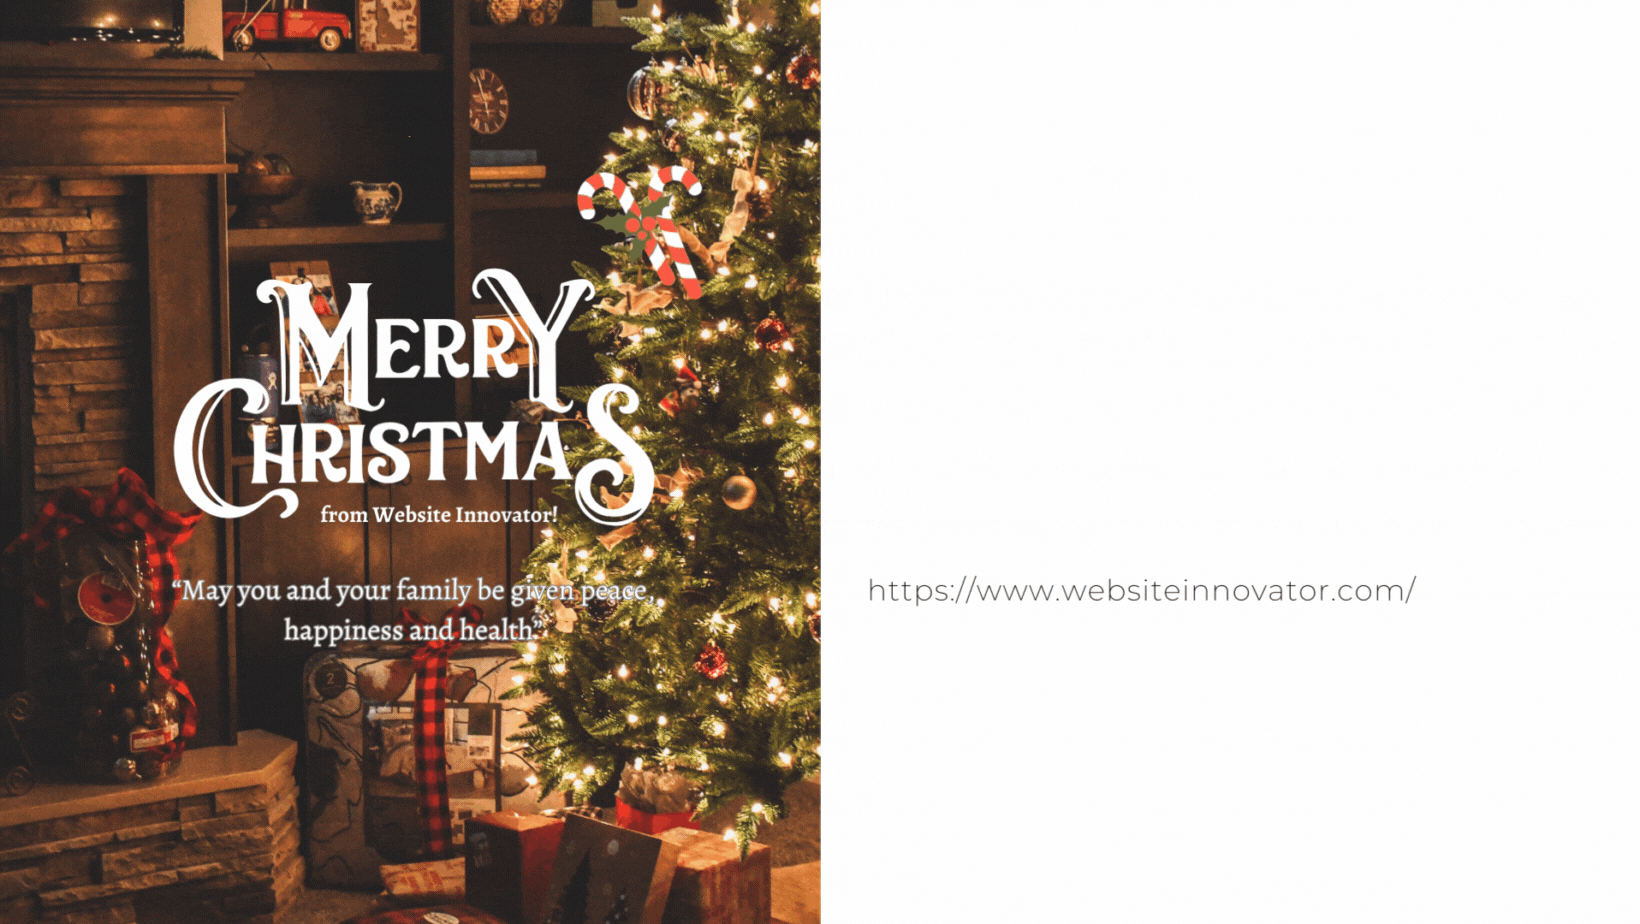 Merry Christmas from Website Innovator!